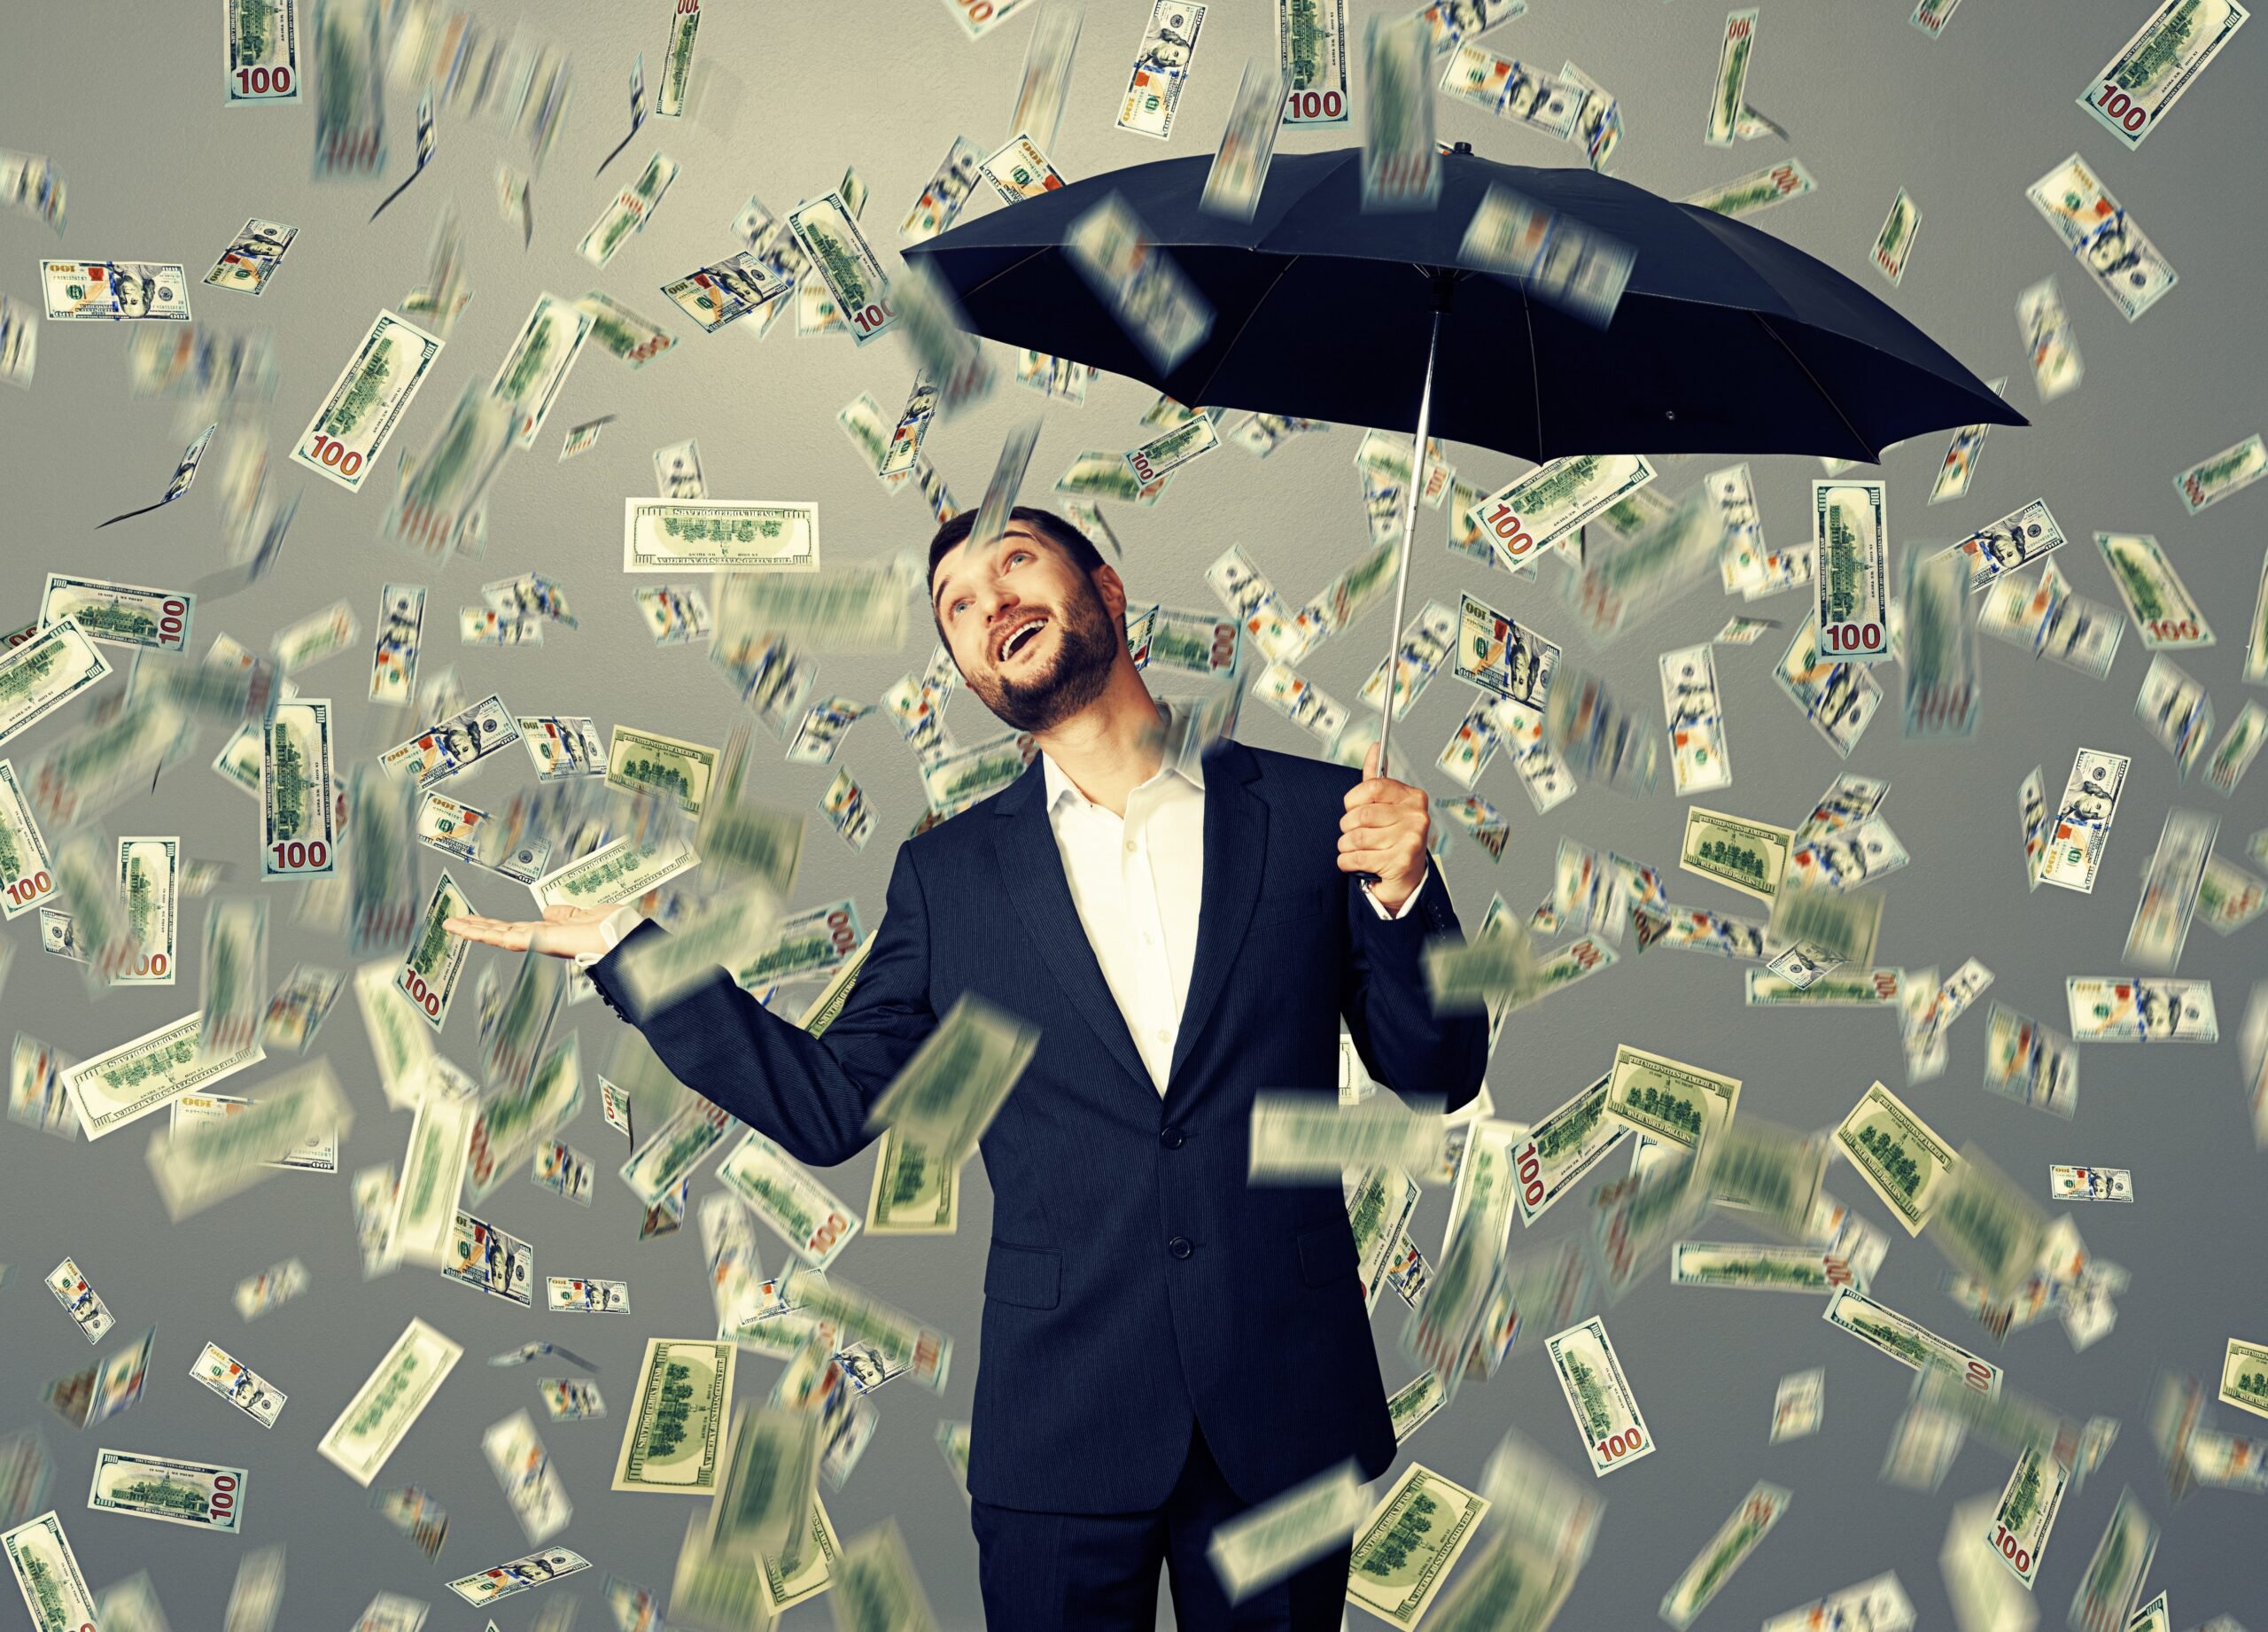 Money Raining Down On Man With Umbrella